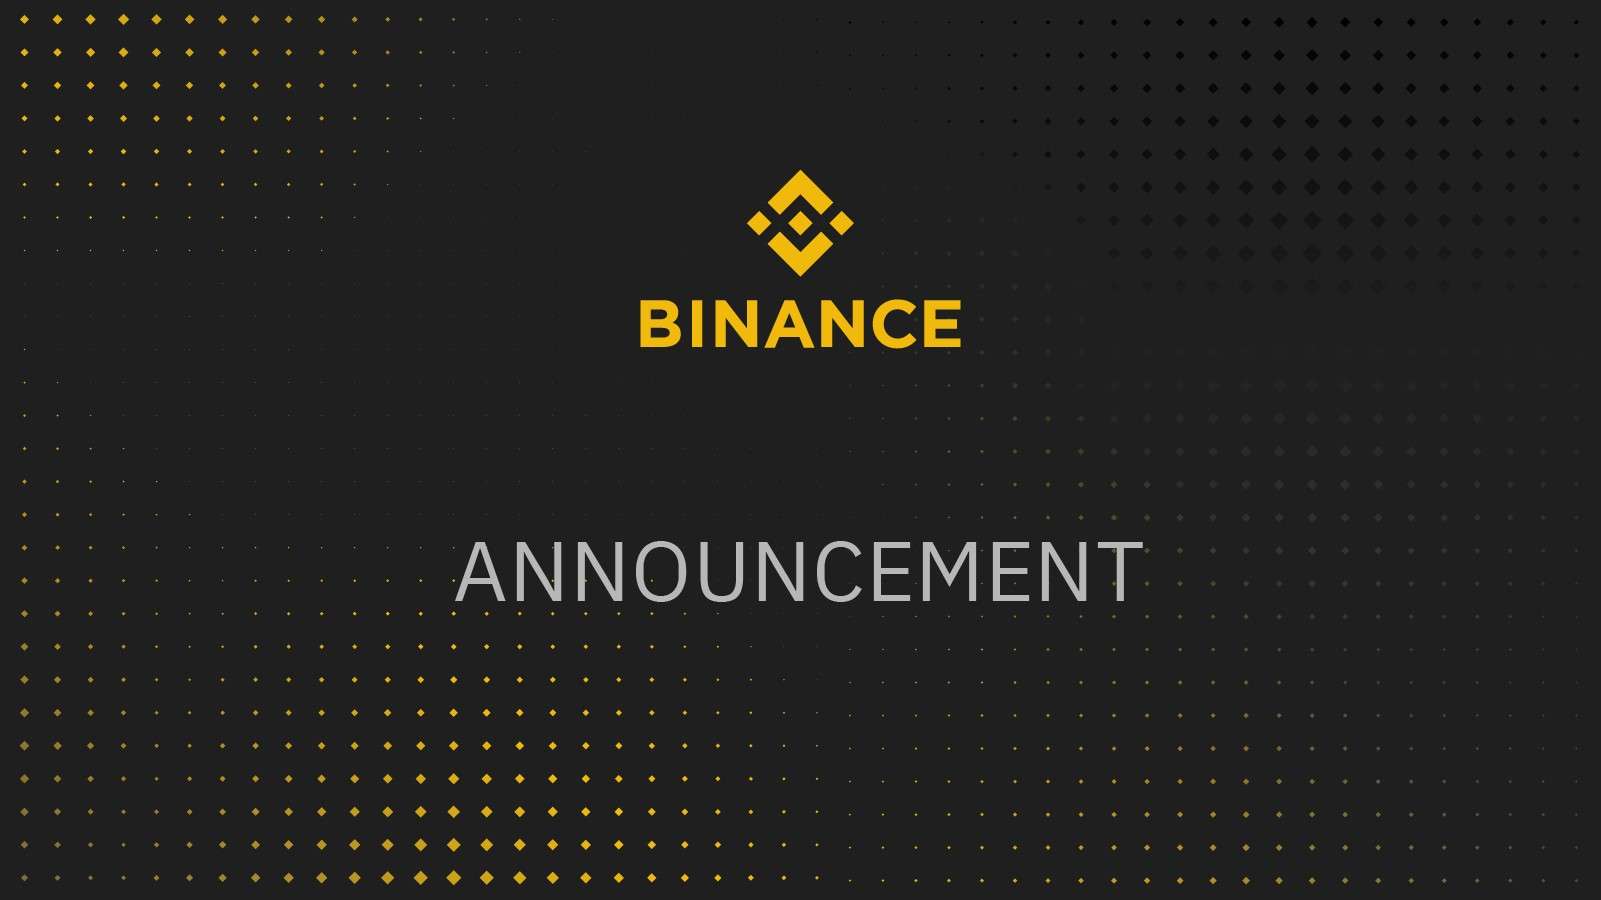 Binance announcement